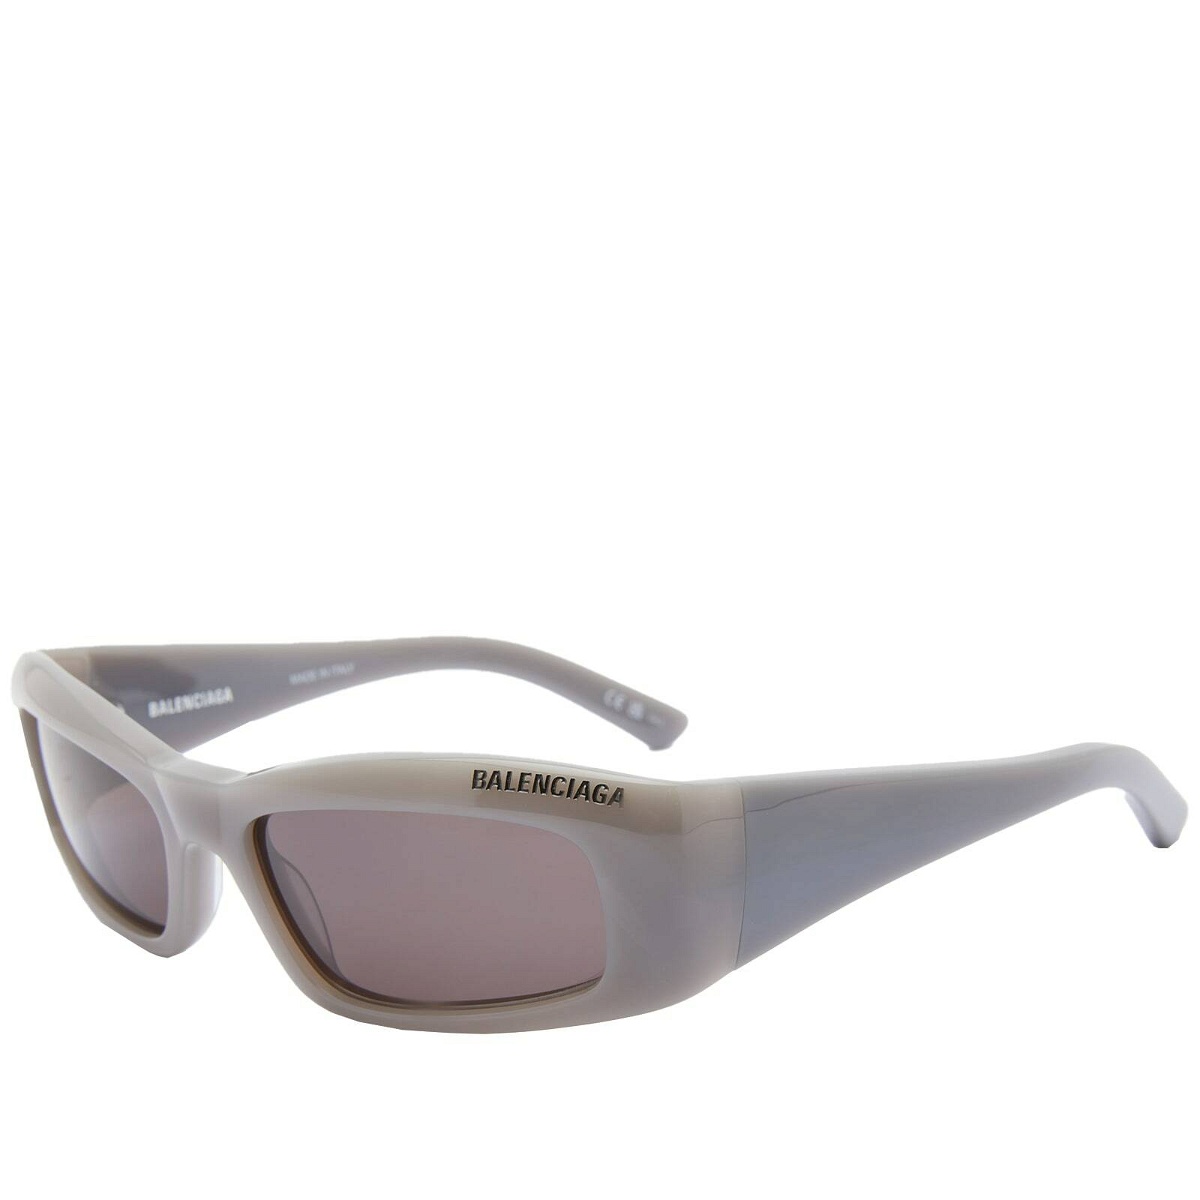 Balenciaga Eyewear BB0266S Sunglasses in Grey Balenciaga